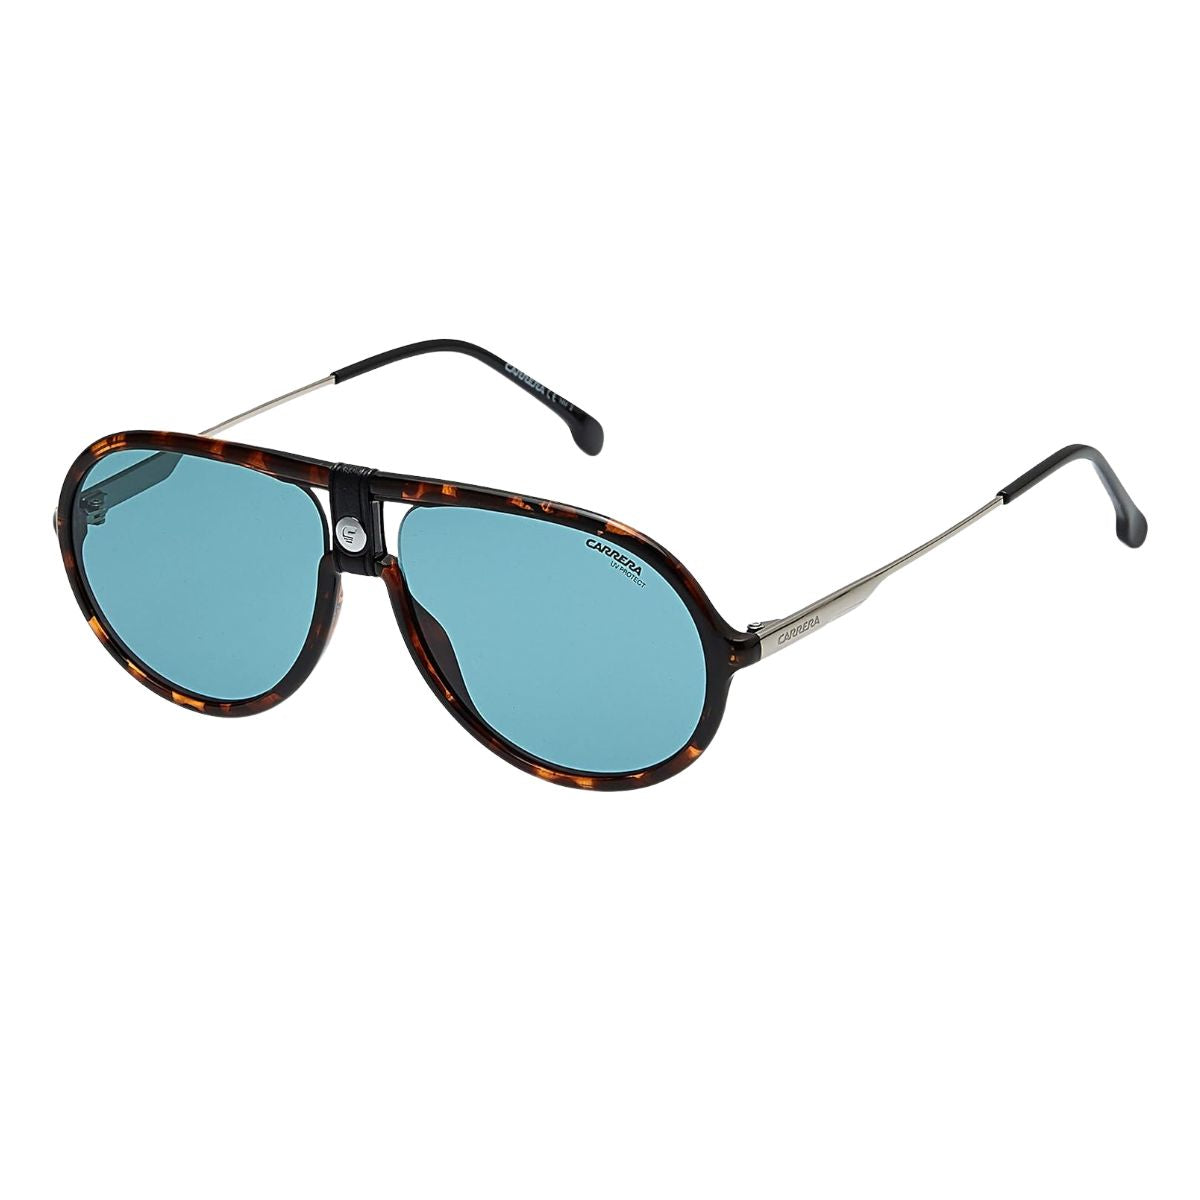 "Buy Stylish Carrera Brown Aviator Sunglasses For Mens At Optorium"